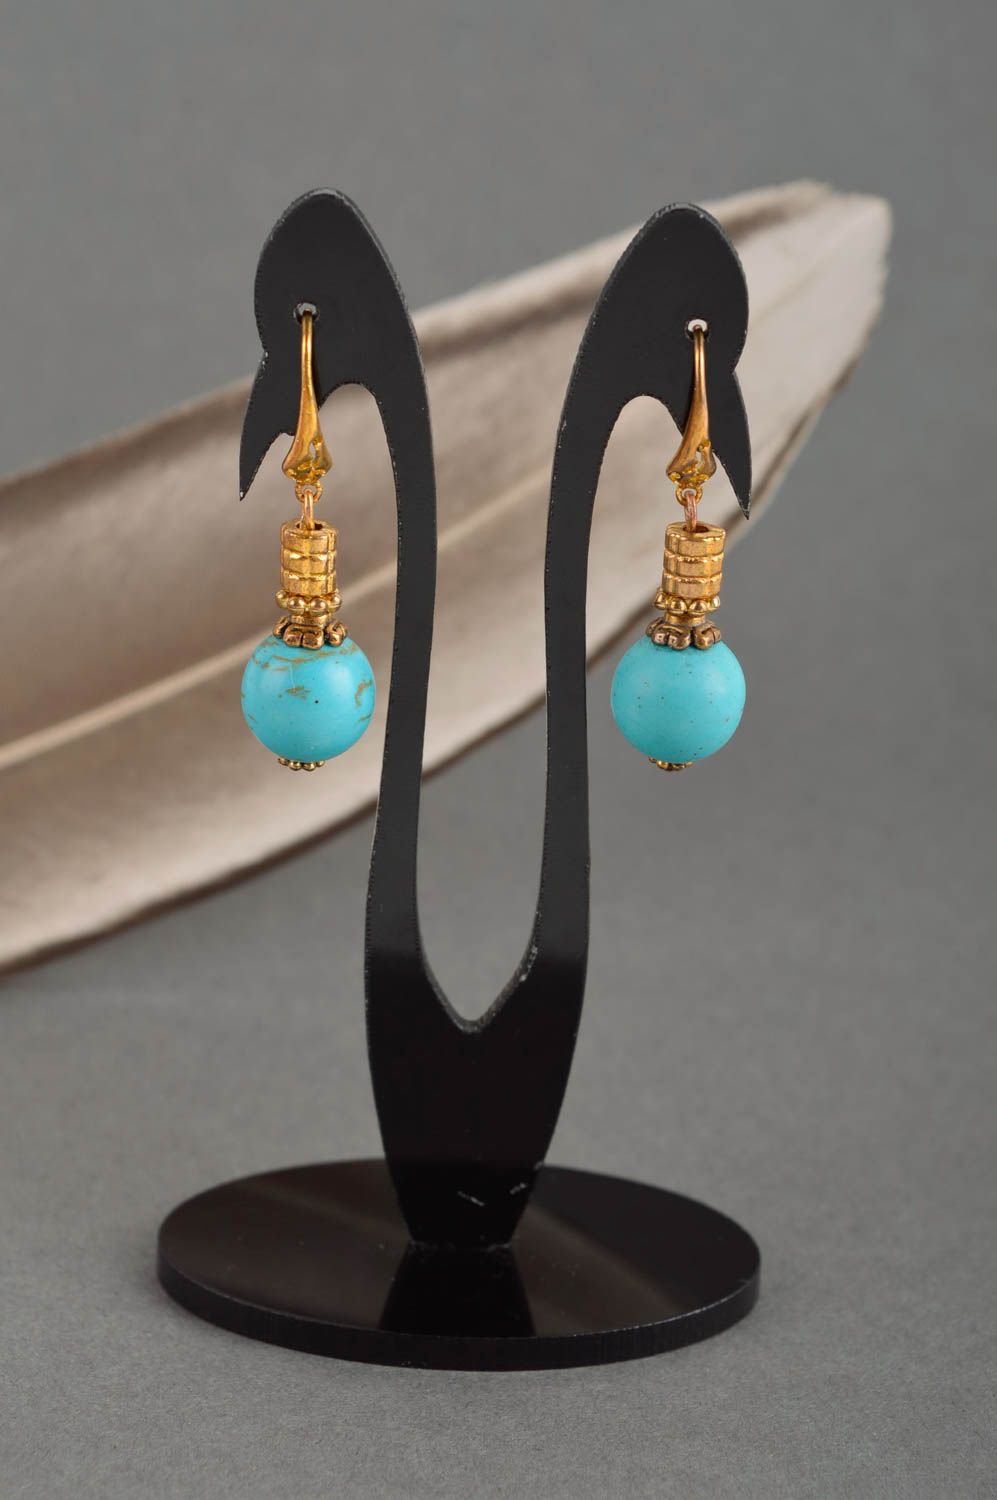 Handmade earrings designer jewelry turquoise earrings fashion accessories photo 1